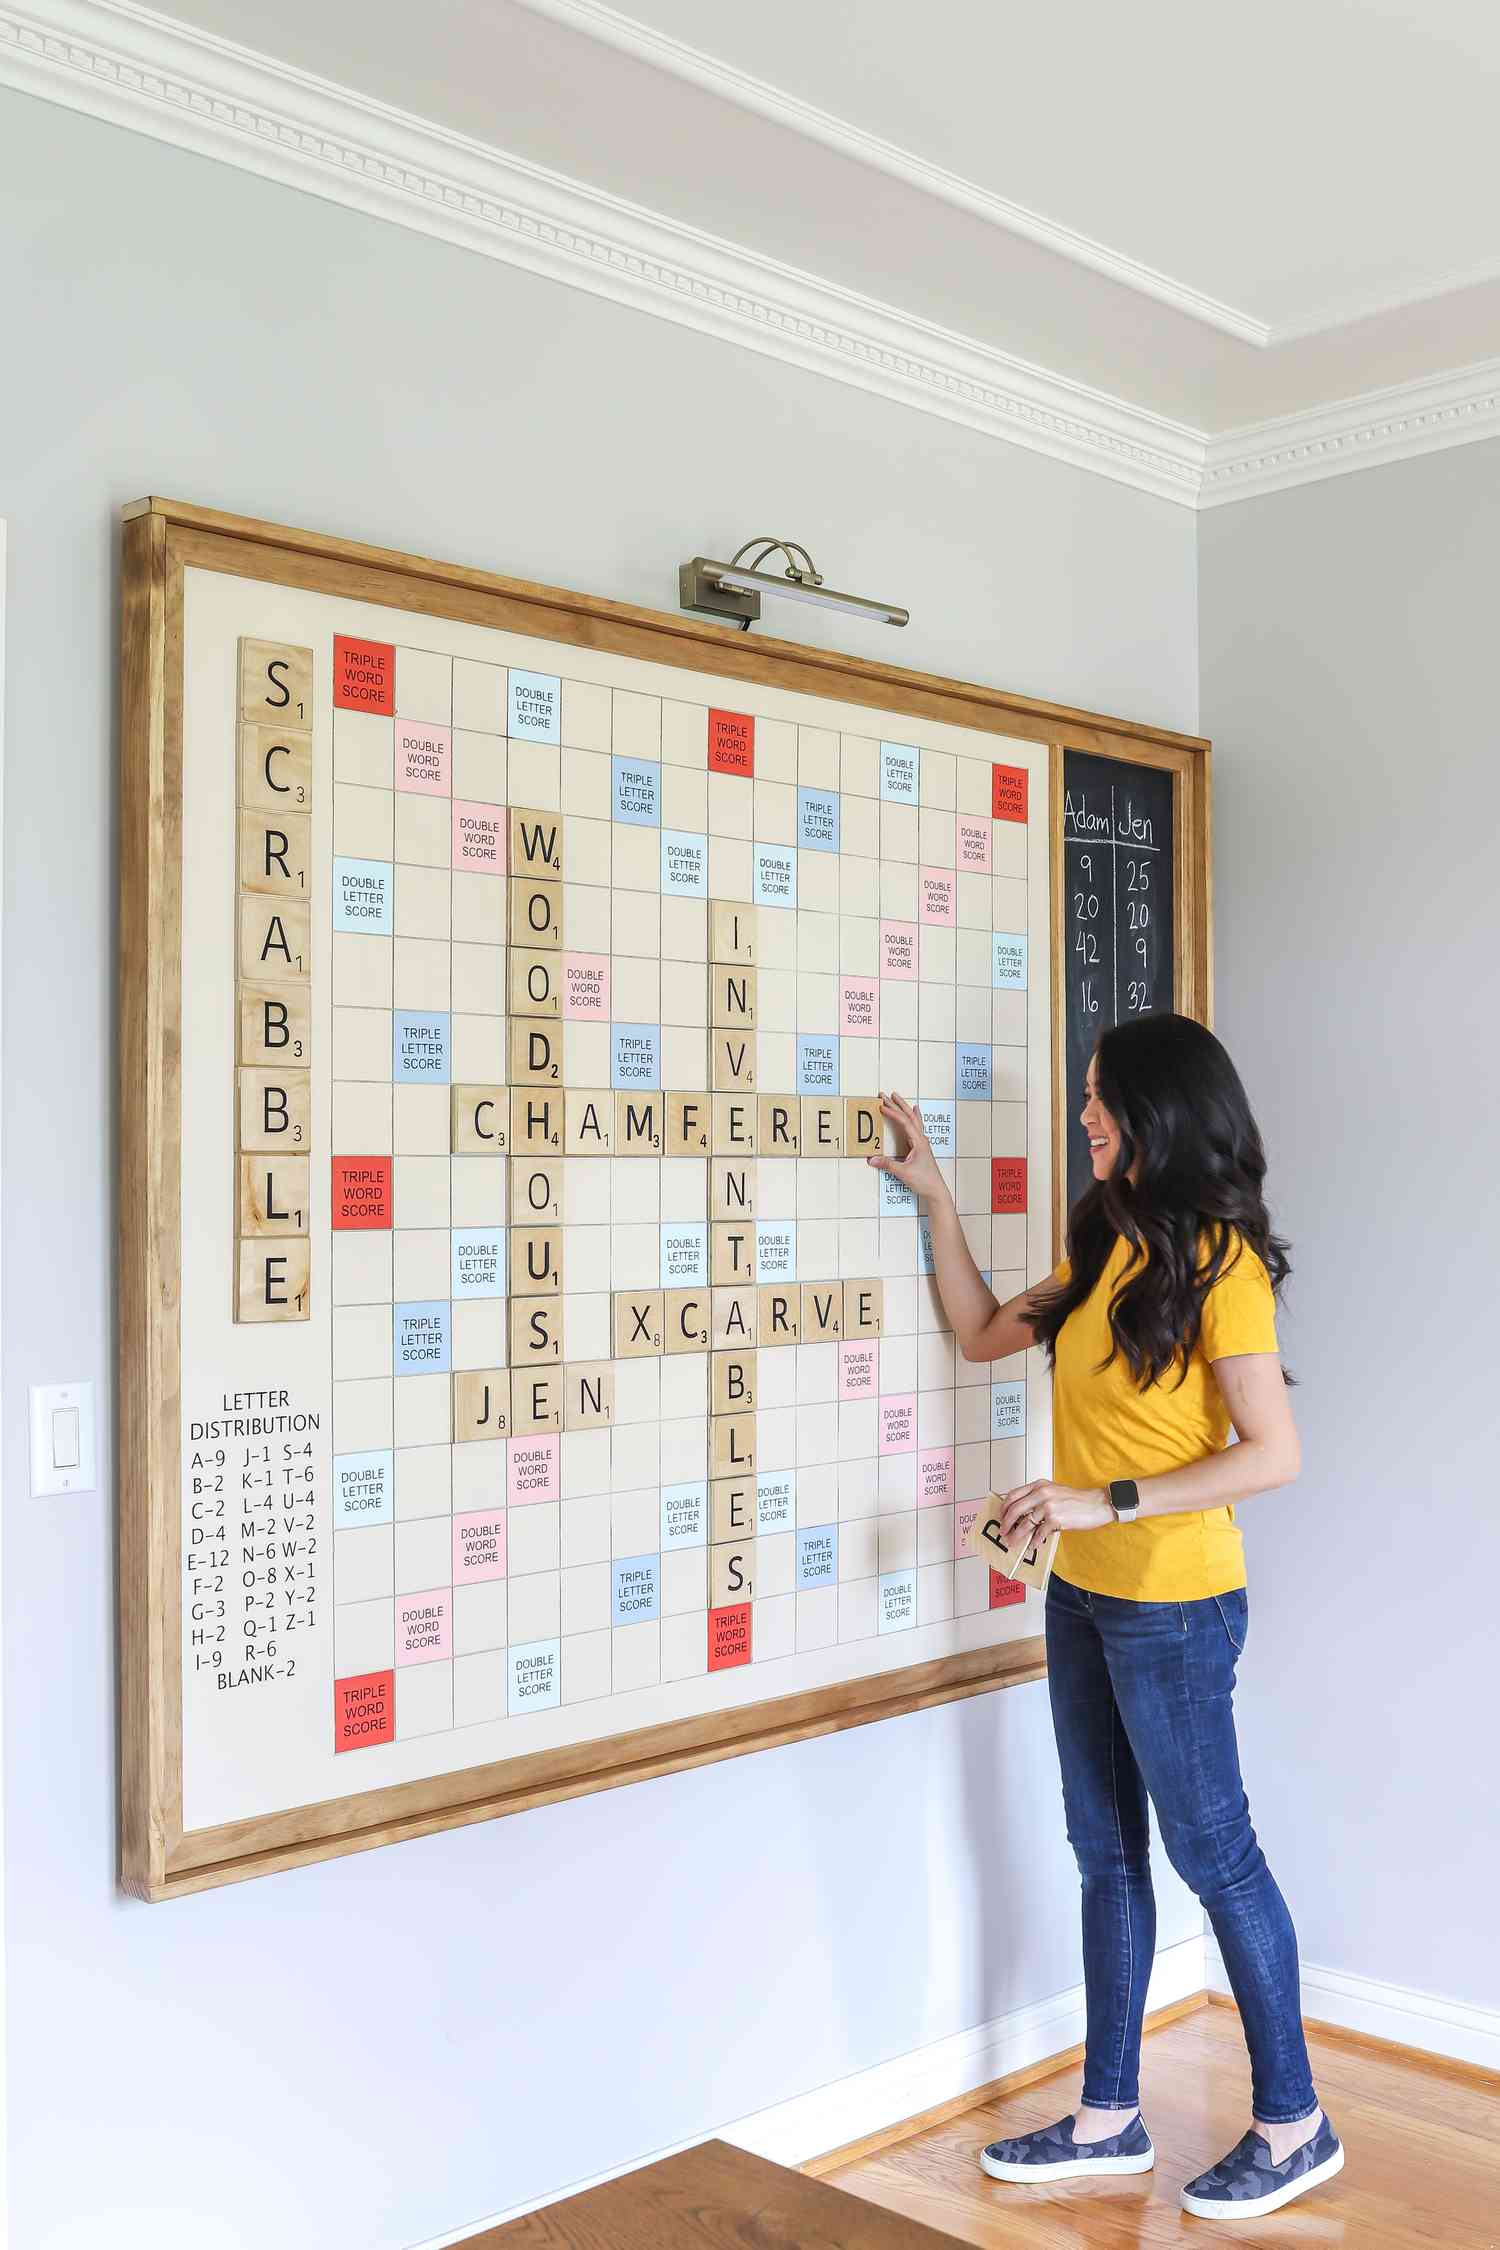 Jen Woodhouse posiert neben ihrem DIY-Riesen-Scrabble-Brett an der Wand